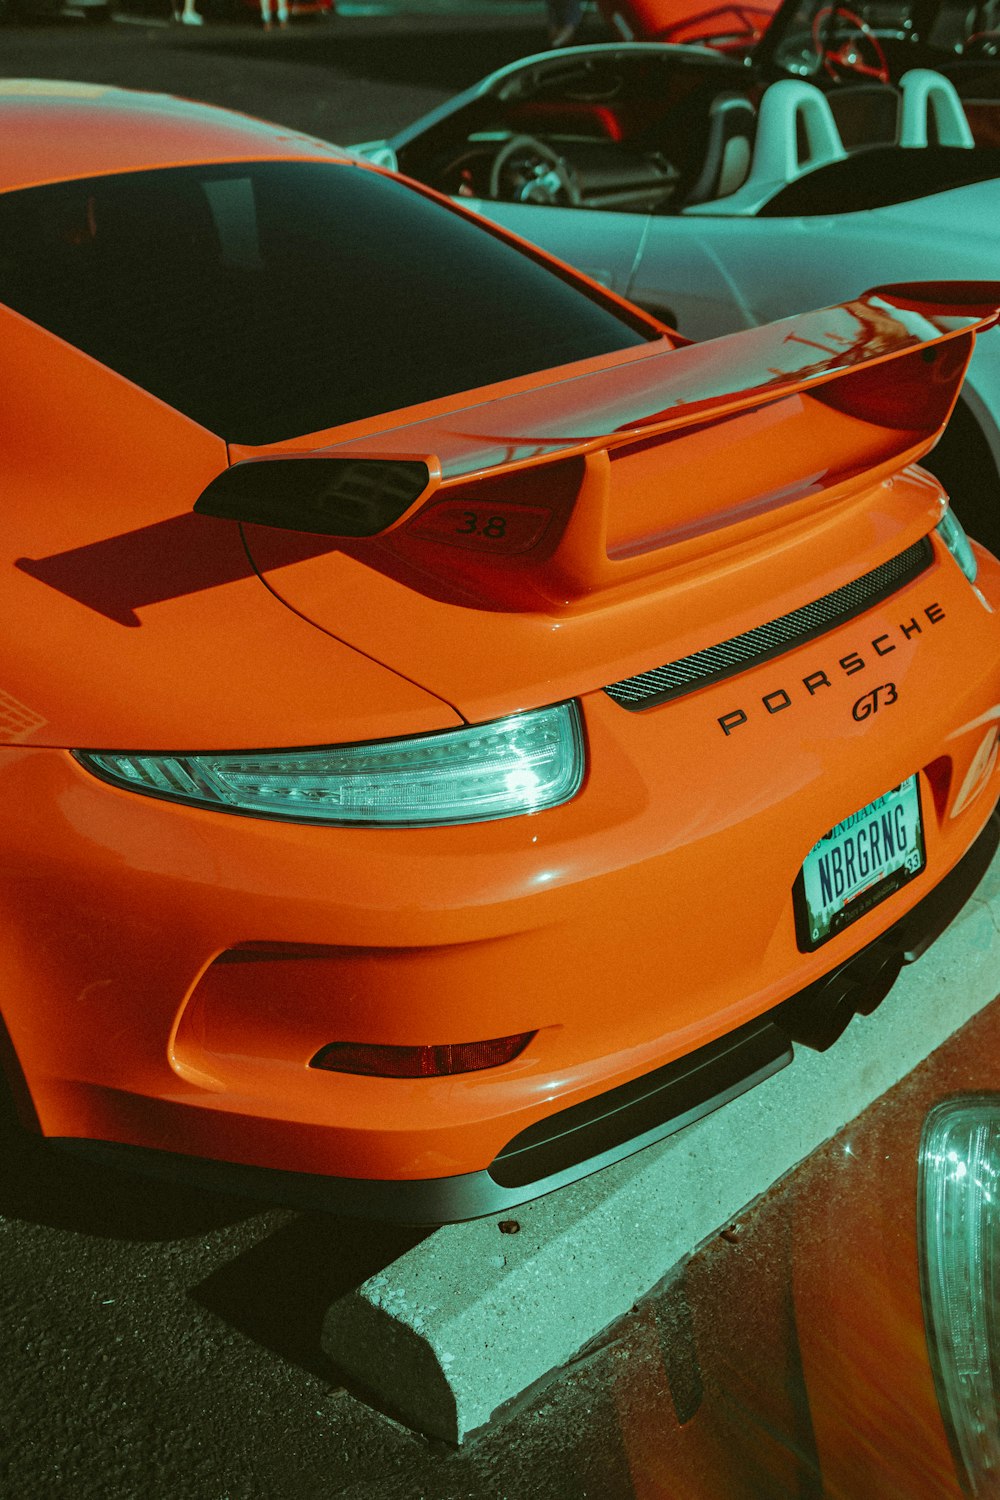 orange Porsche sports coupe parked near white convertible car